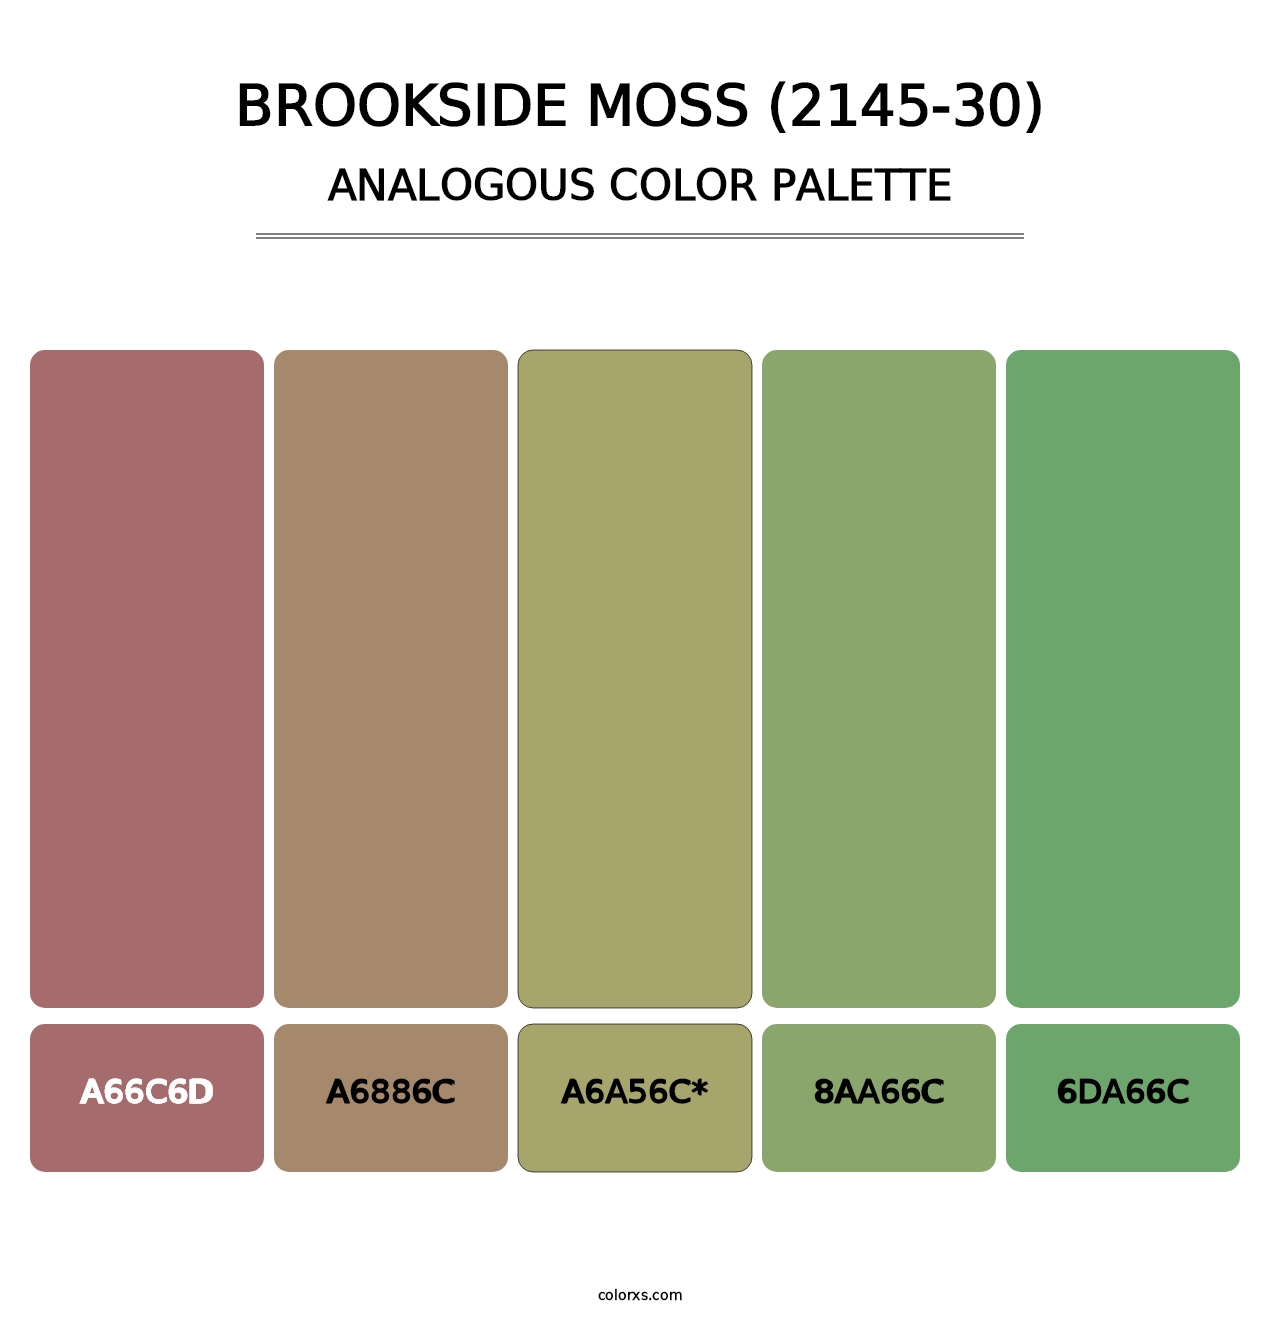 Brookside Moss (2145-30) - Analogous Color Palette